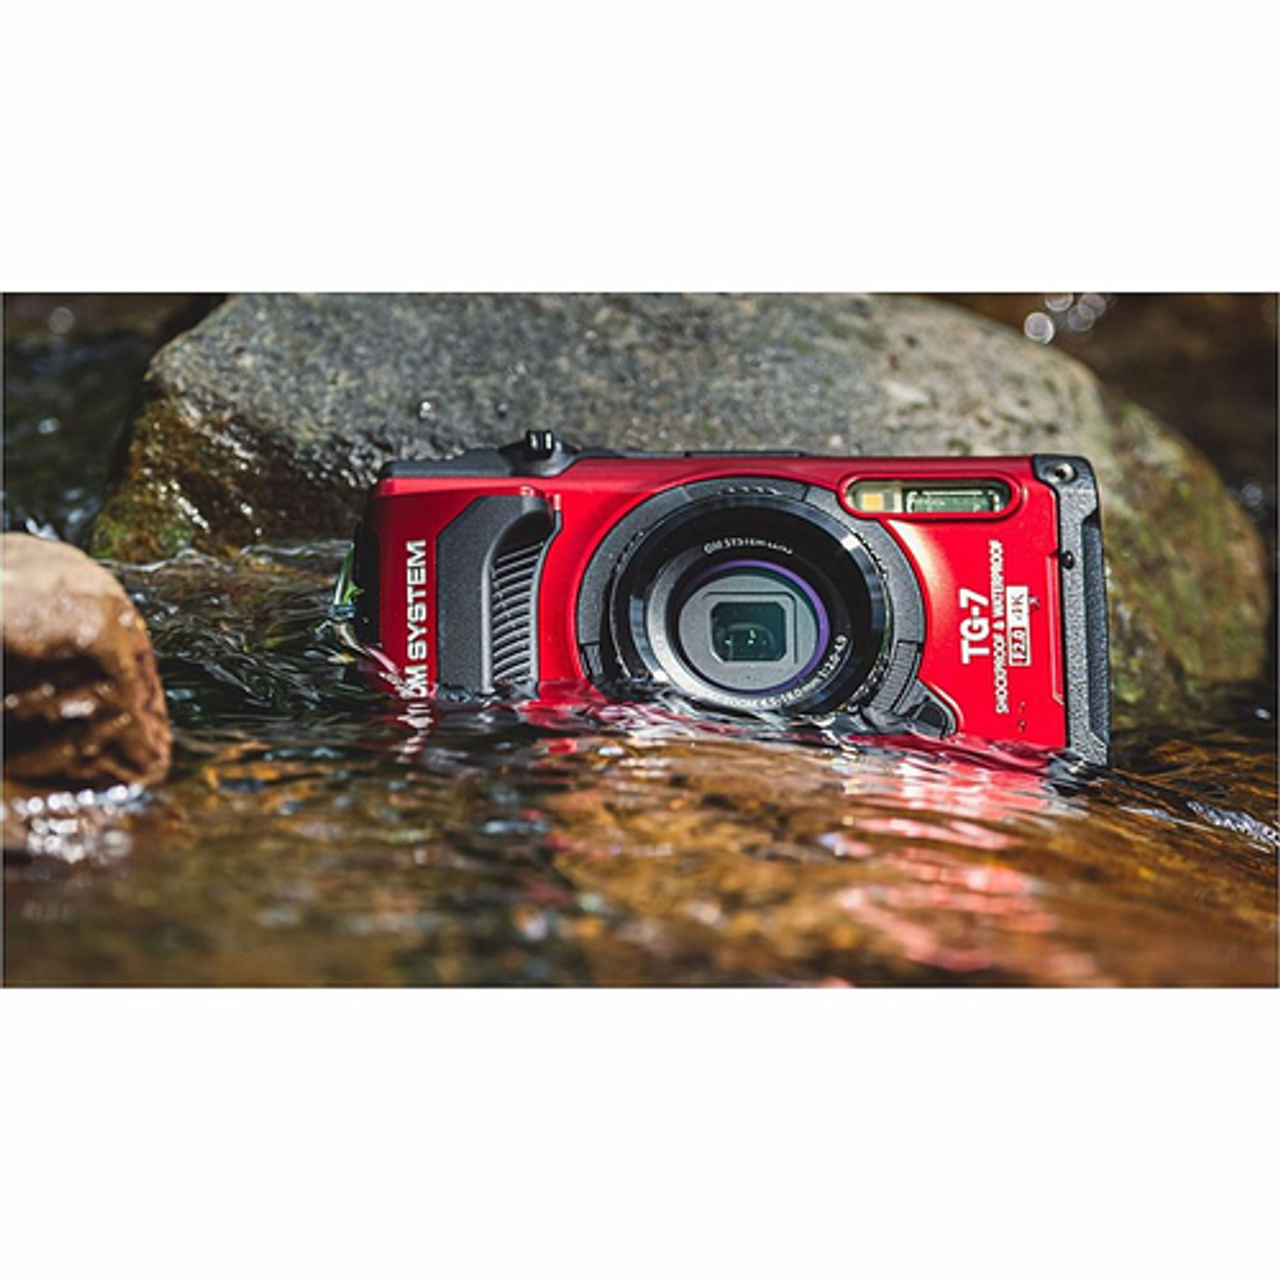 Olympus - OM SYSTEM TG-7 4K Video 12 Megapixel Waterproof Compact Camera - Red